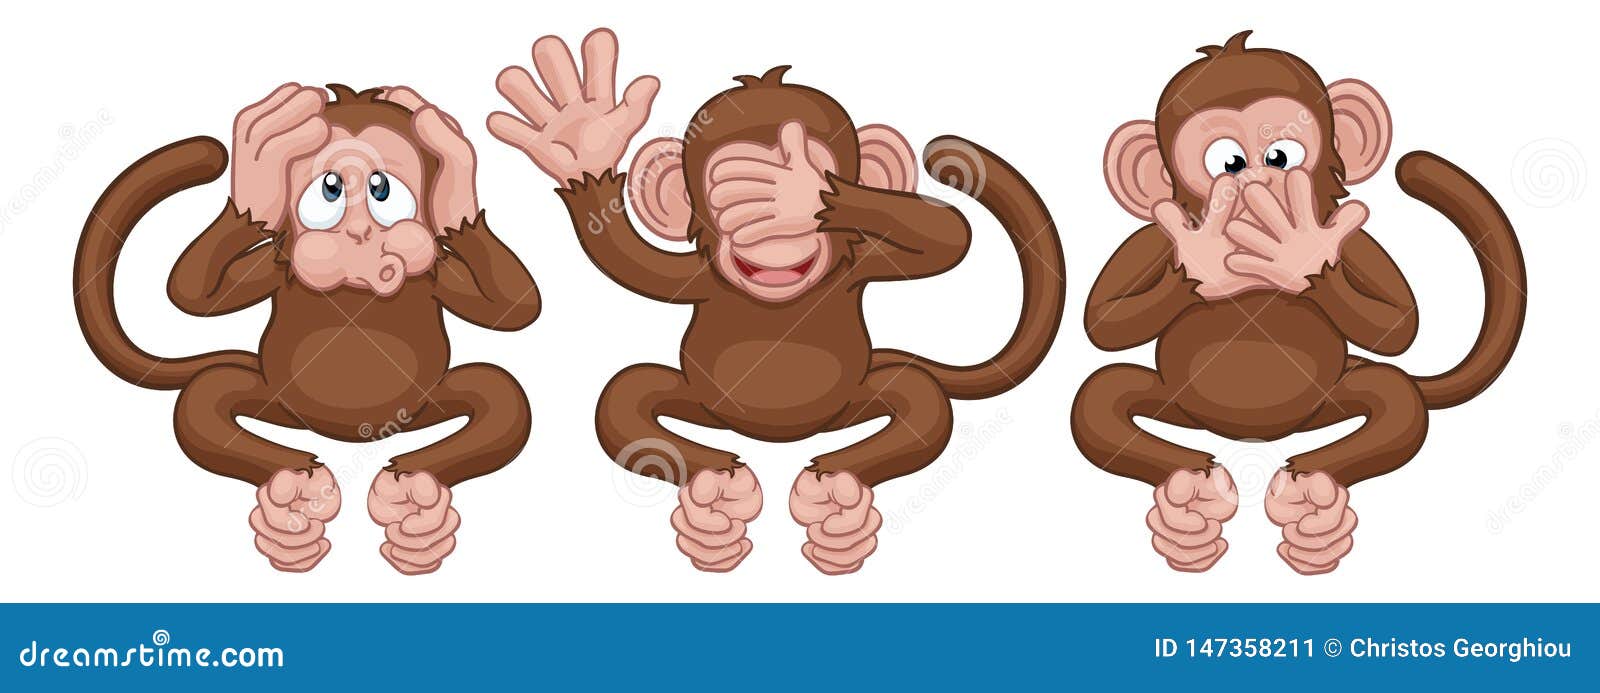 monkeys see hear speak no evil cartoon characters